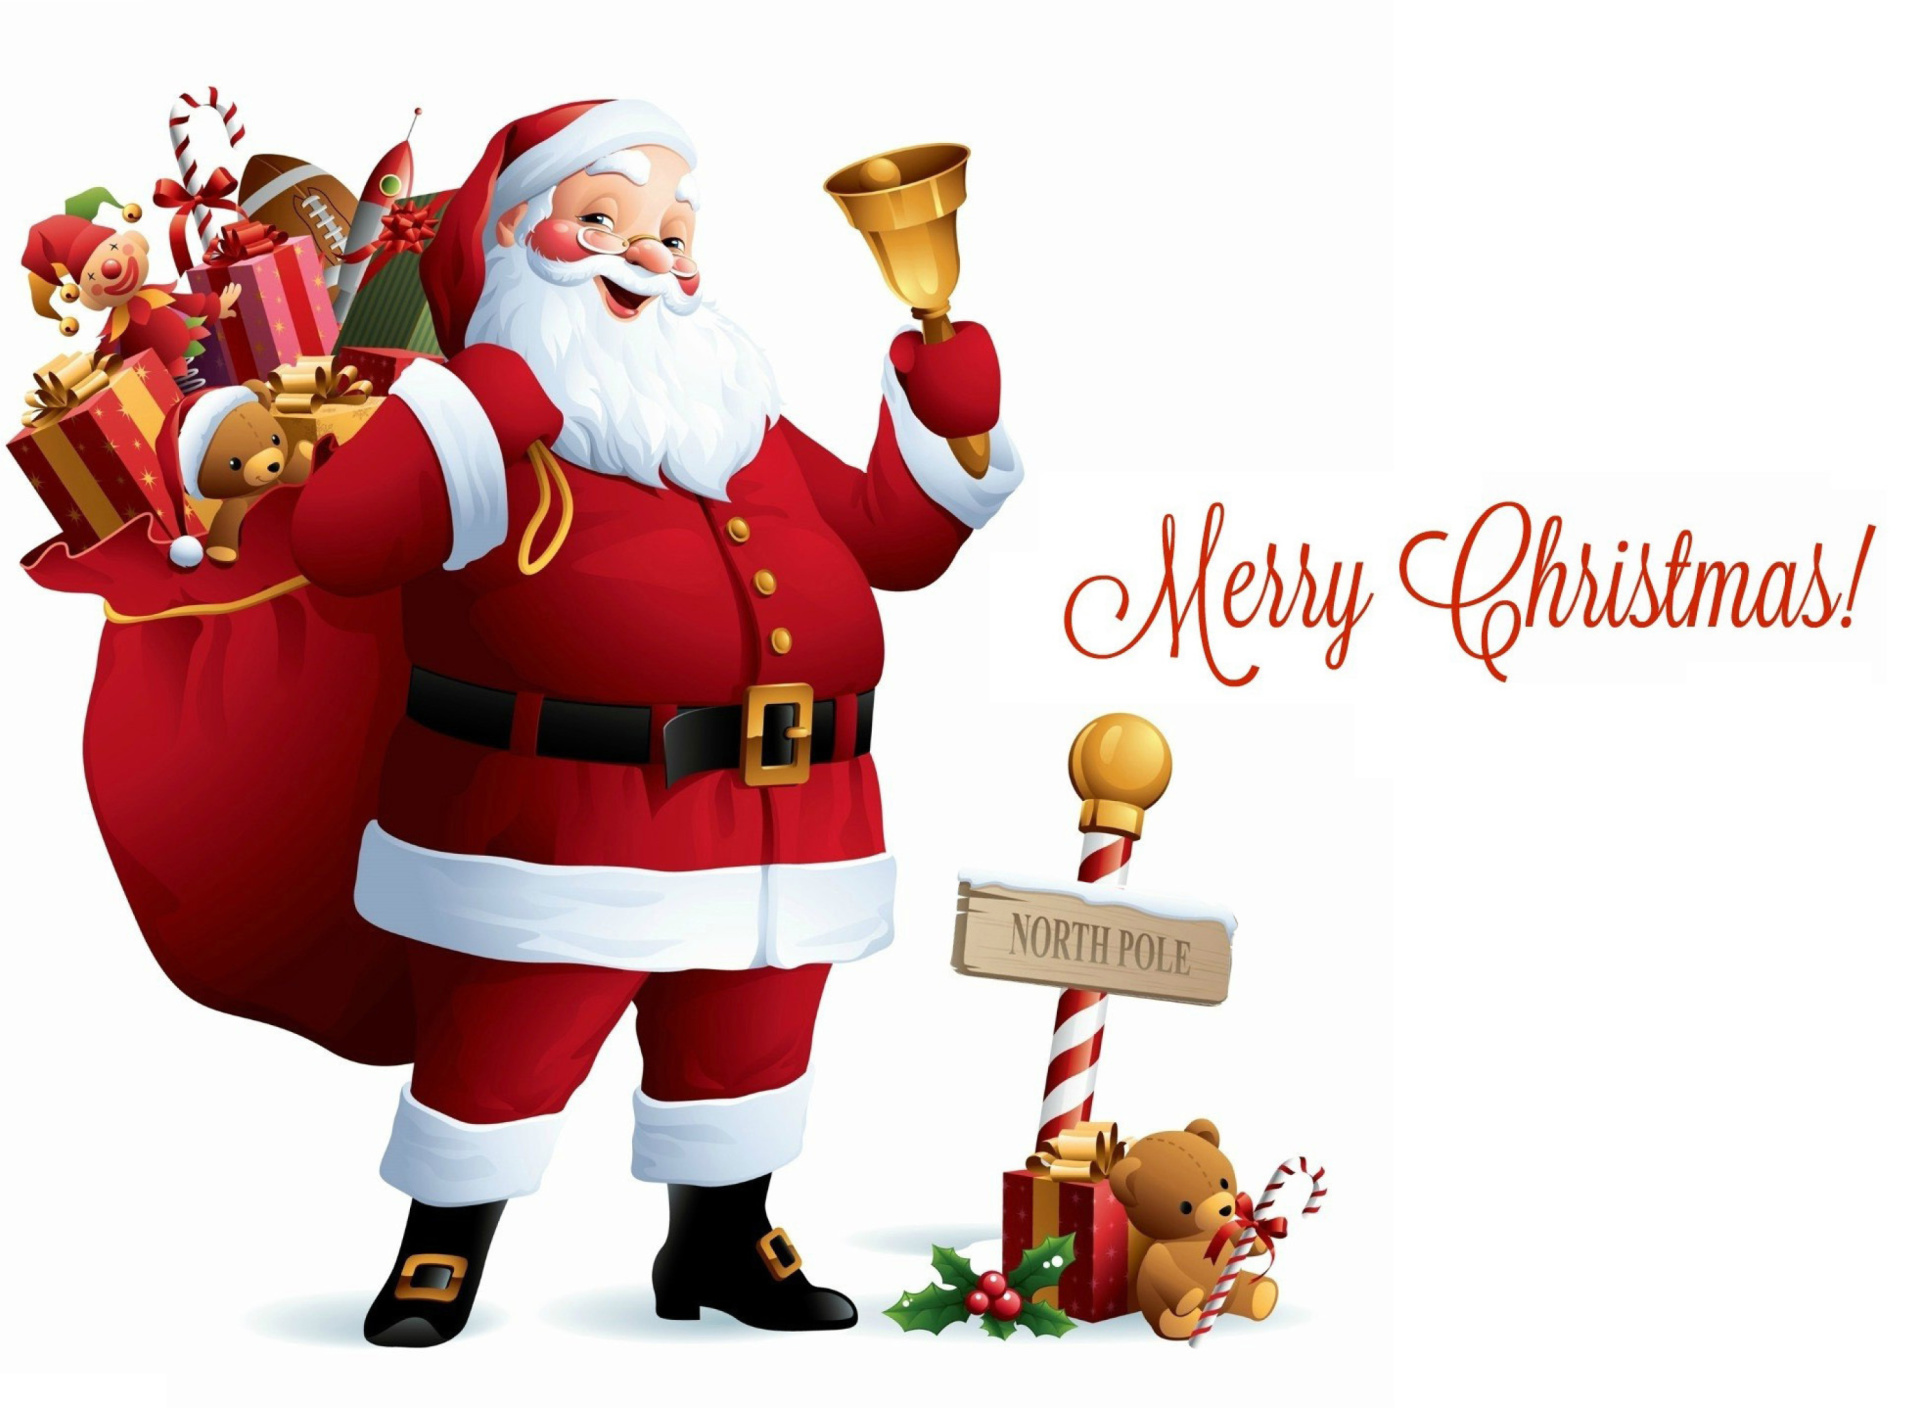 Das HO HO HO Merry Christmas Santa Claus Wallpaper 1920x1408